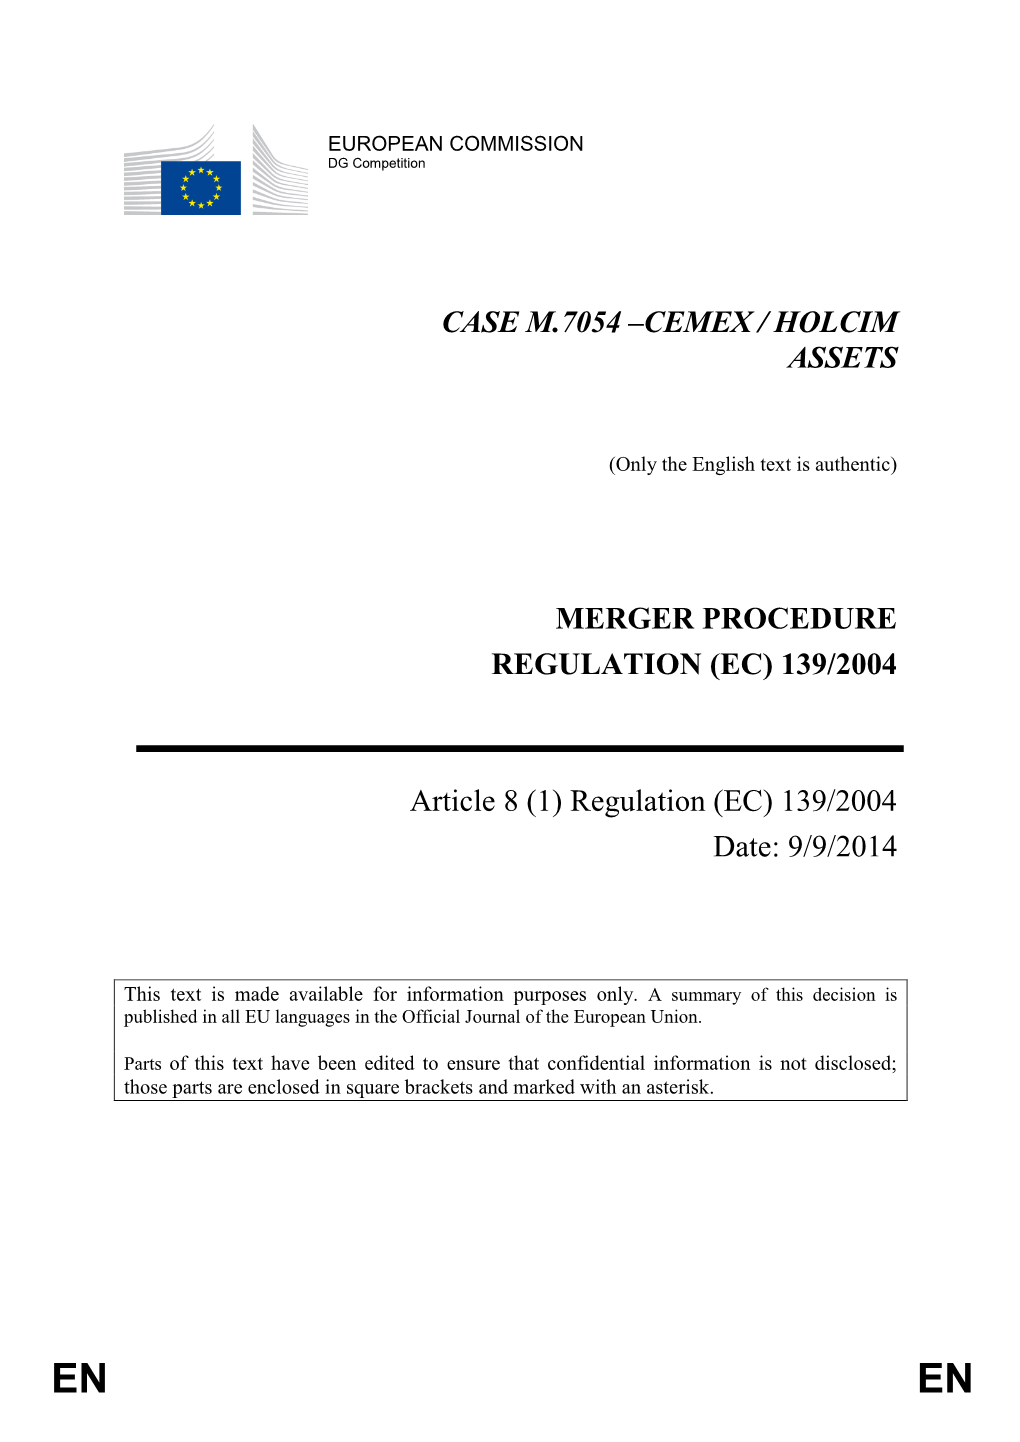 CASE M.7054 –CEMEX / HOLCIM ASSETS MERGER PROCEDURE REGULATION (EC) 139/2004 Article 8